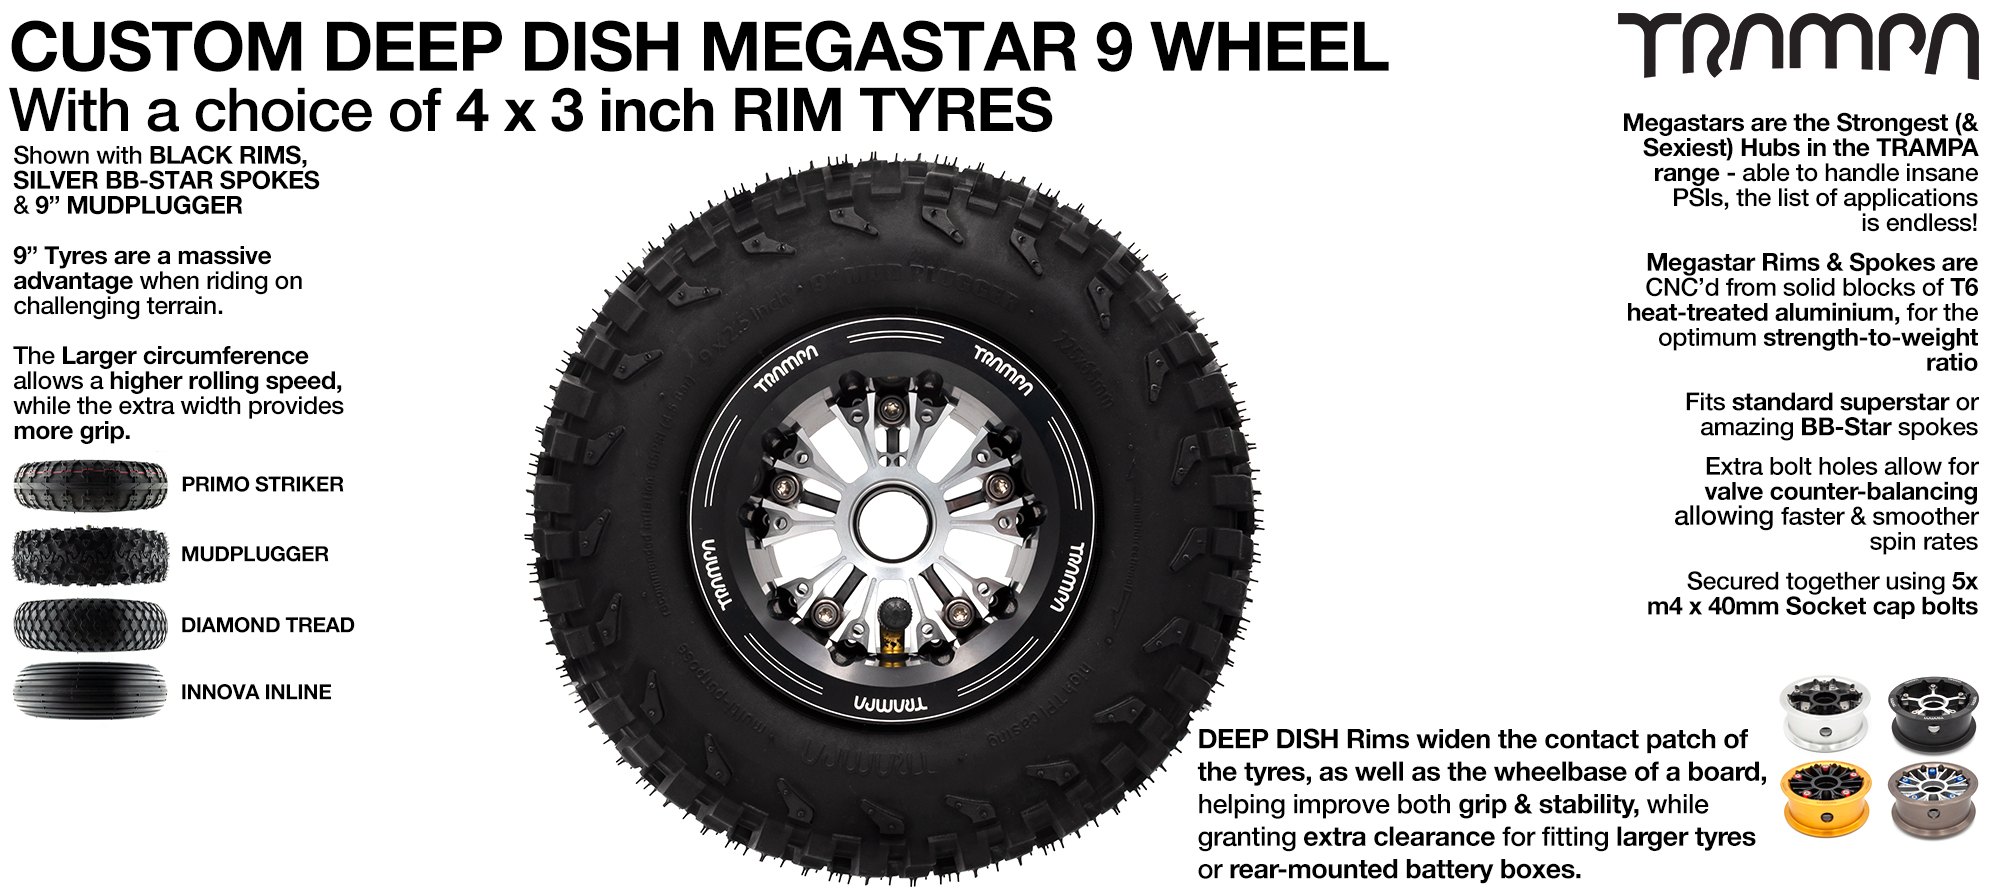 DEEP-DISH MEGASTAR 9 Rims with 9 Inch Tyres - TRAMPA 9 Inch Wheel